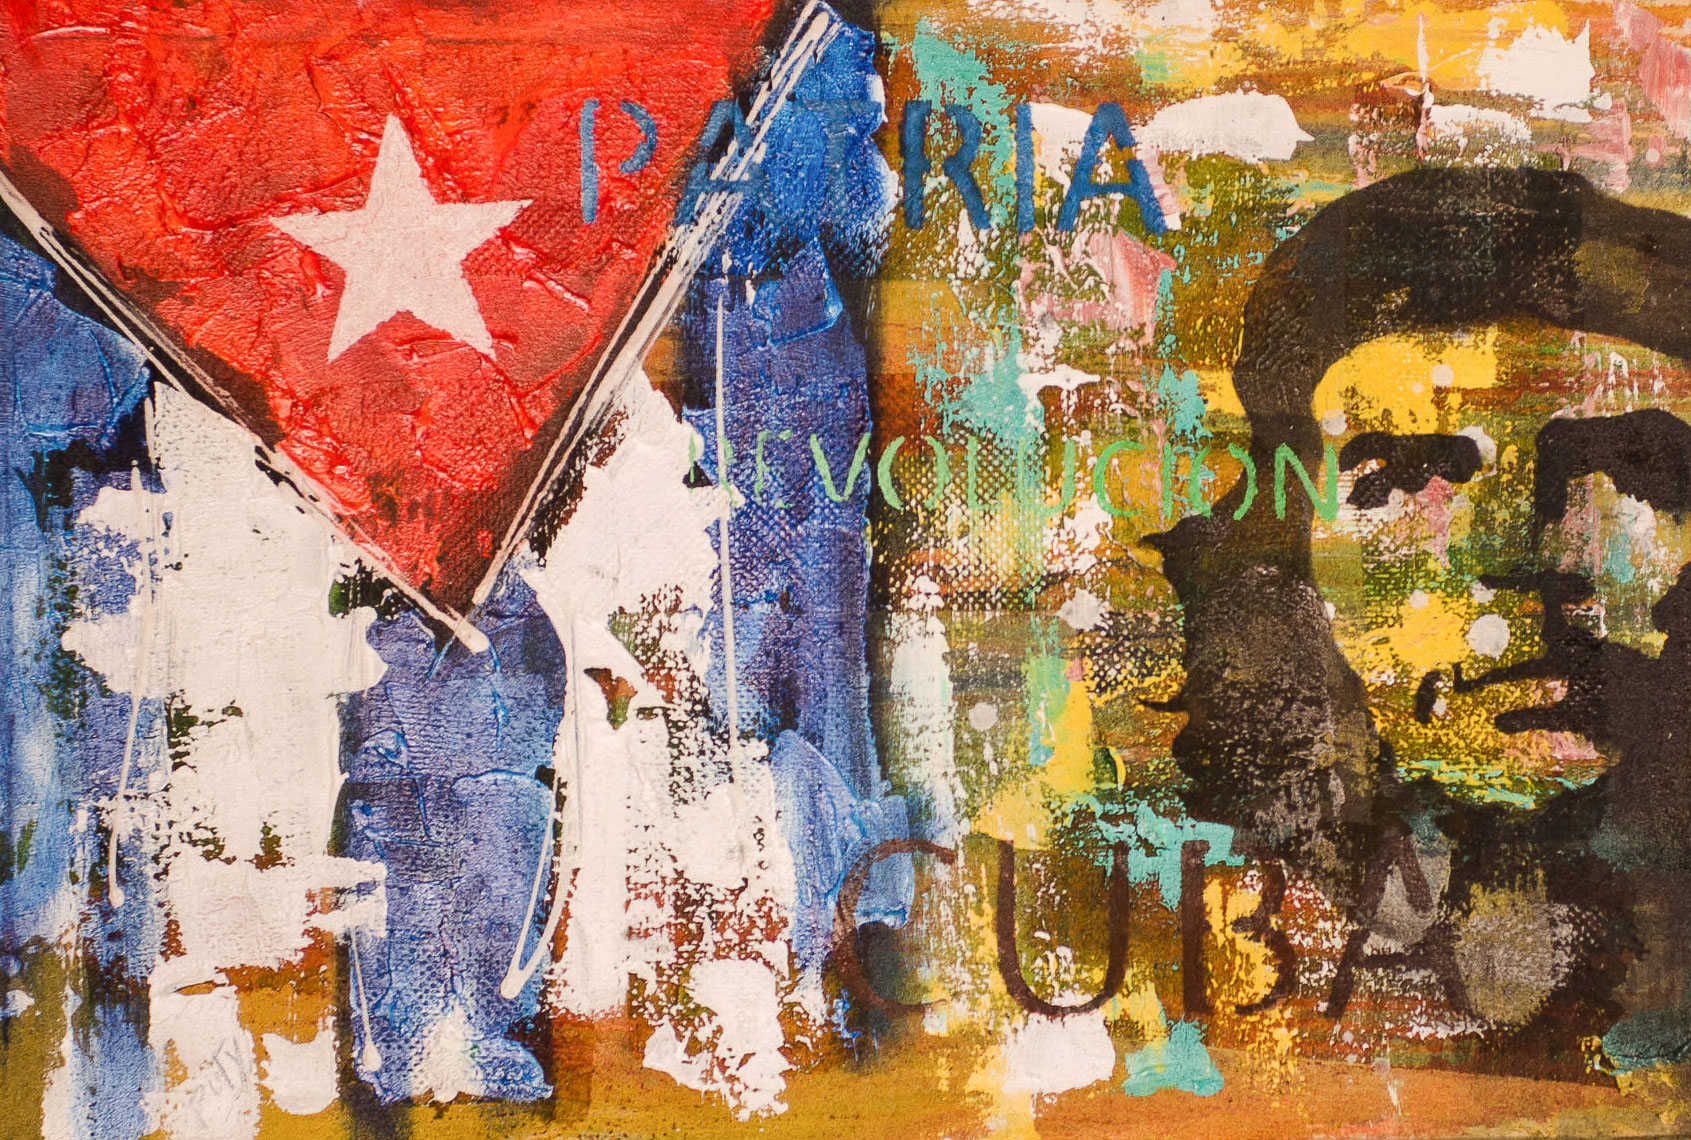 TP_1-98.  A painting to honor Che Guevara.  Havana, Cuba